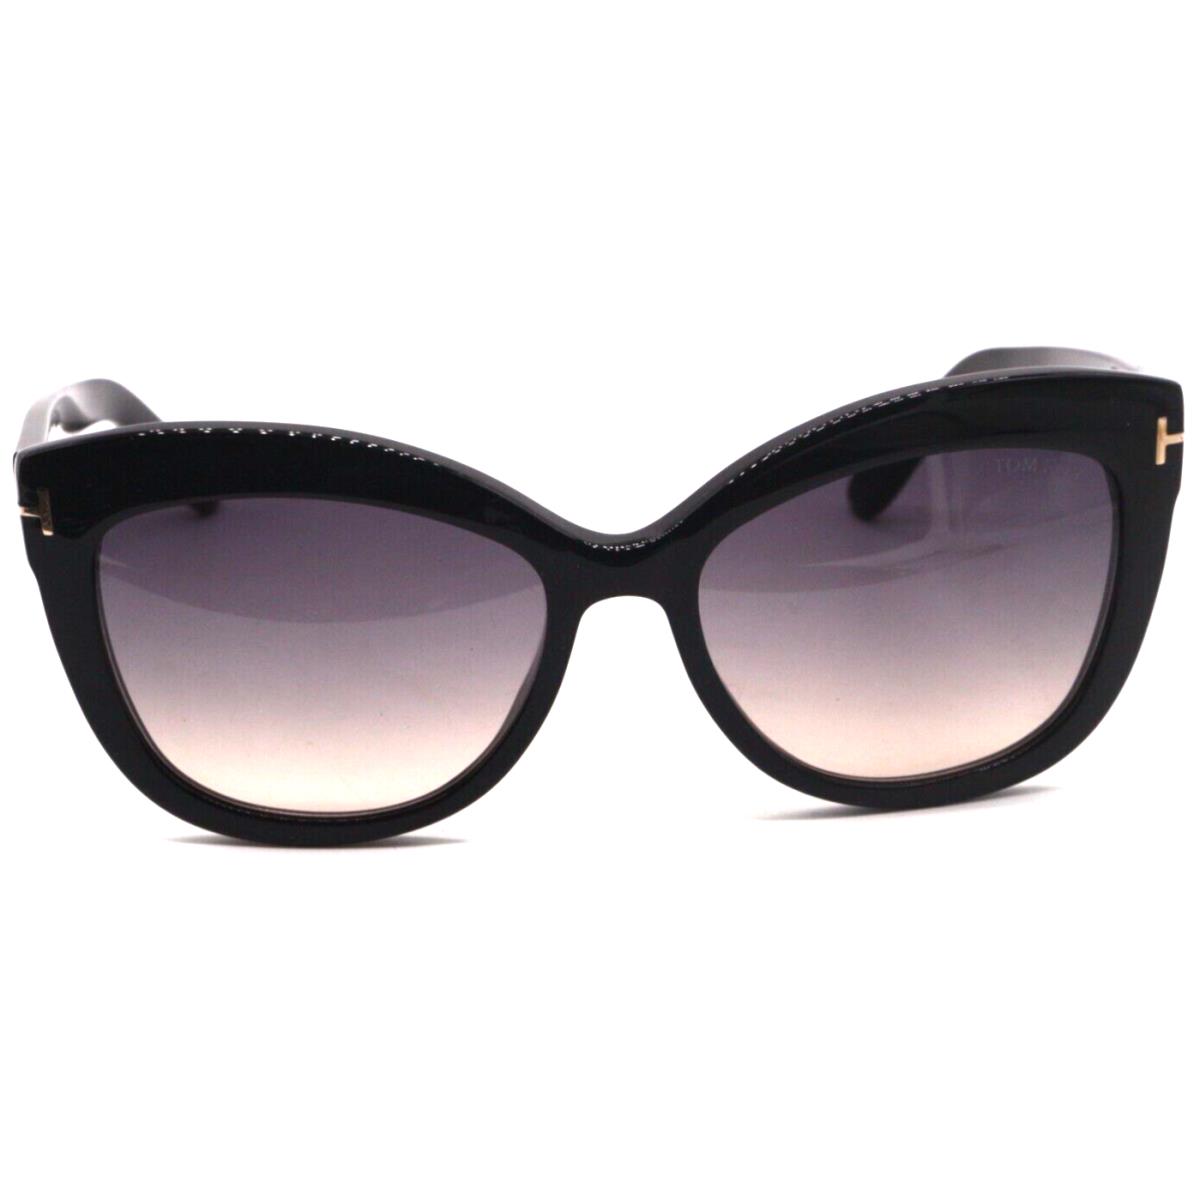 Tom Ford sunglasses  - Frame: Black, Lens: GREY 1